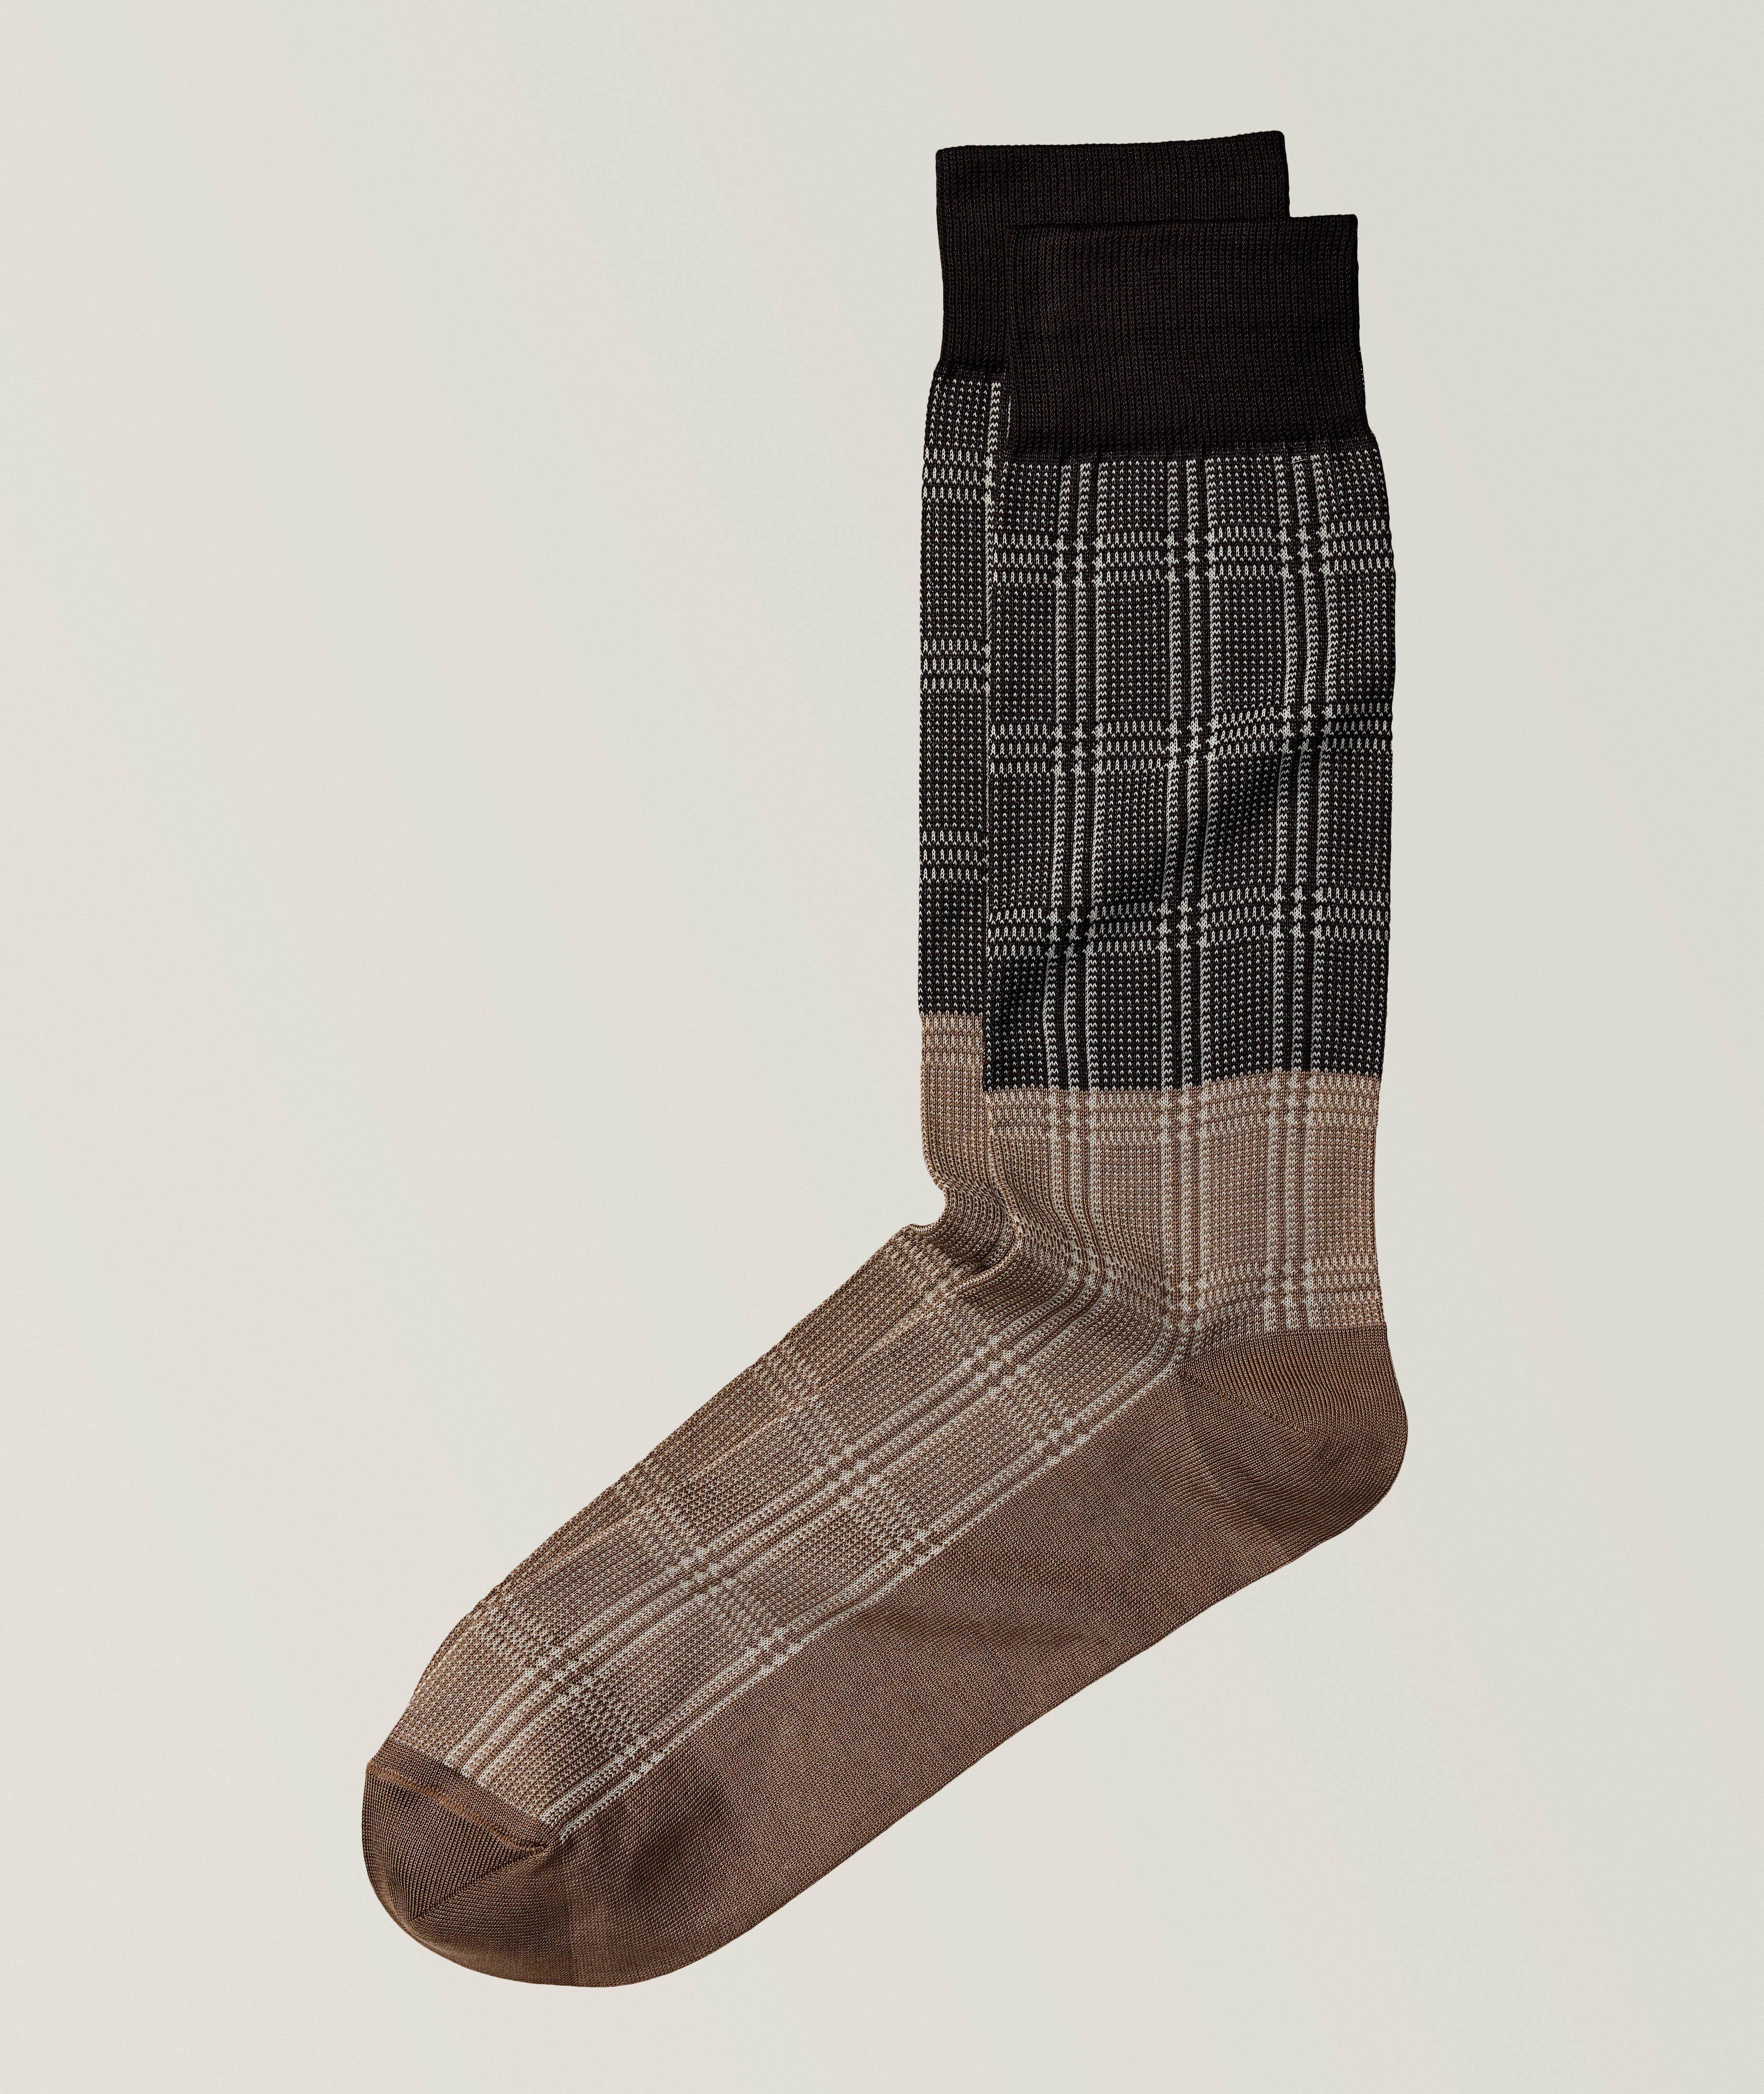 Ricoh Plaid Cotton-Blend Socks image 0